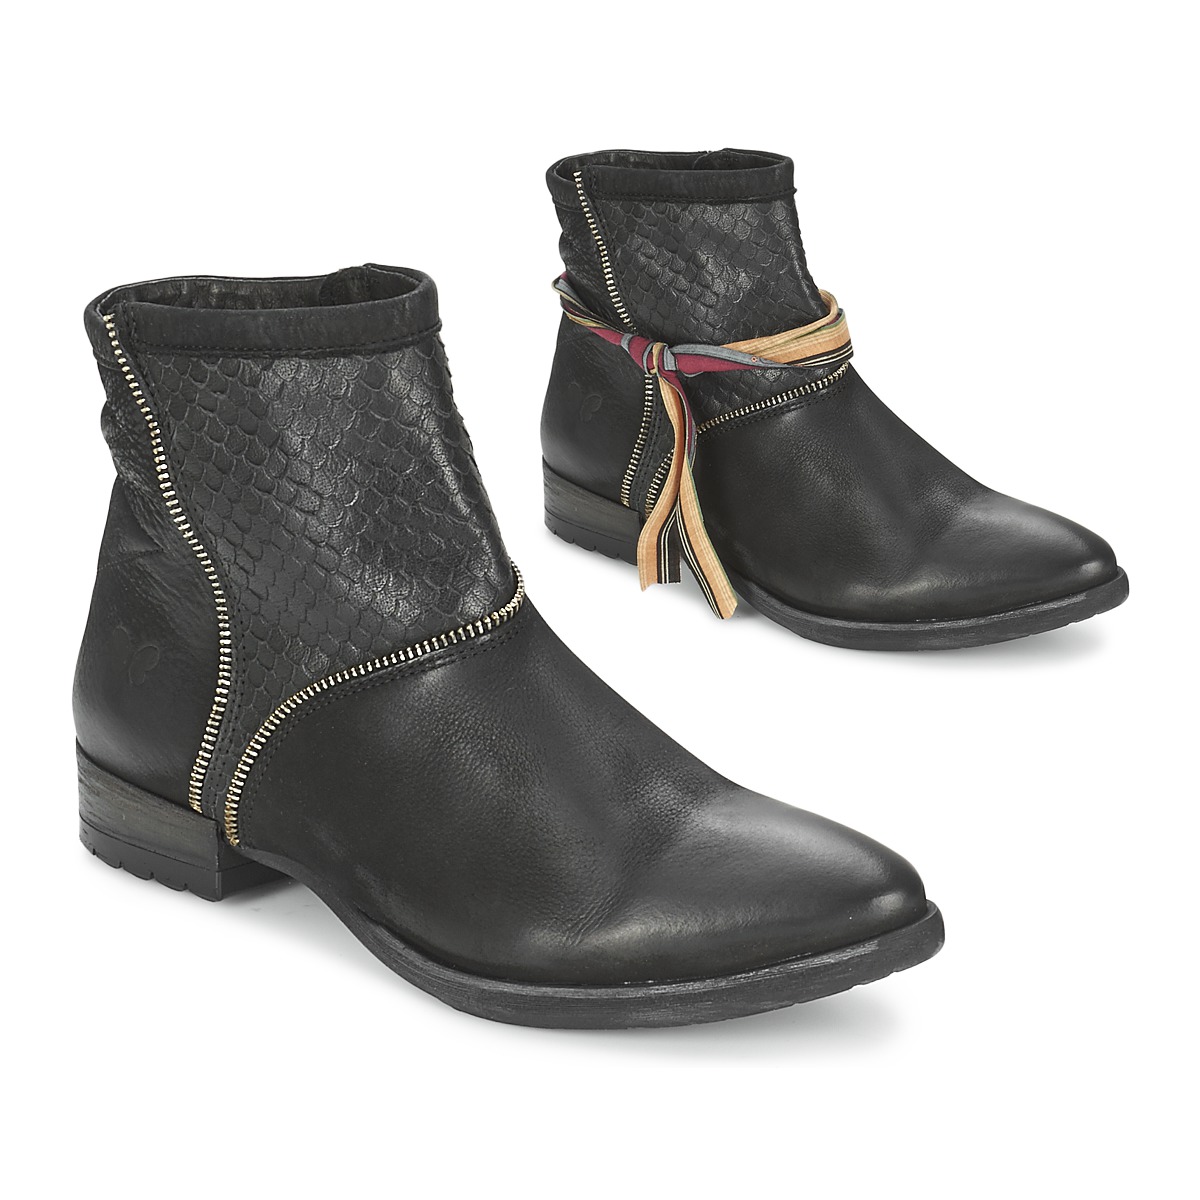 Shoes Women Mid boots Felmini RYO Black